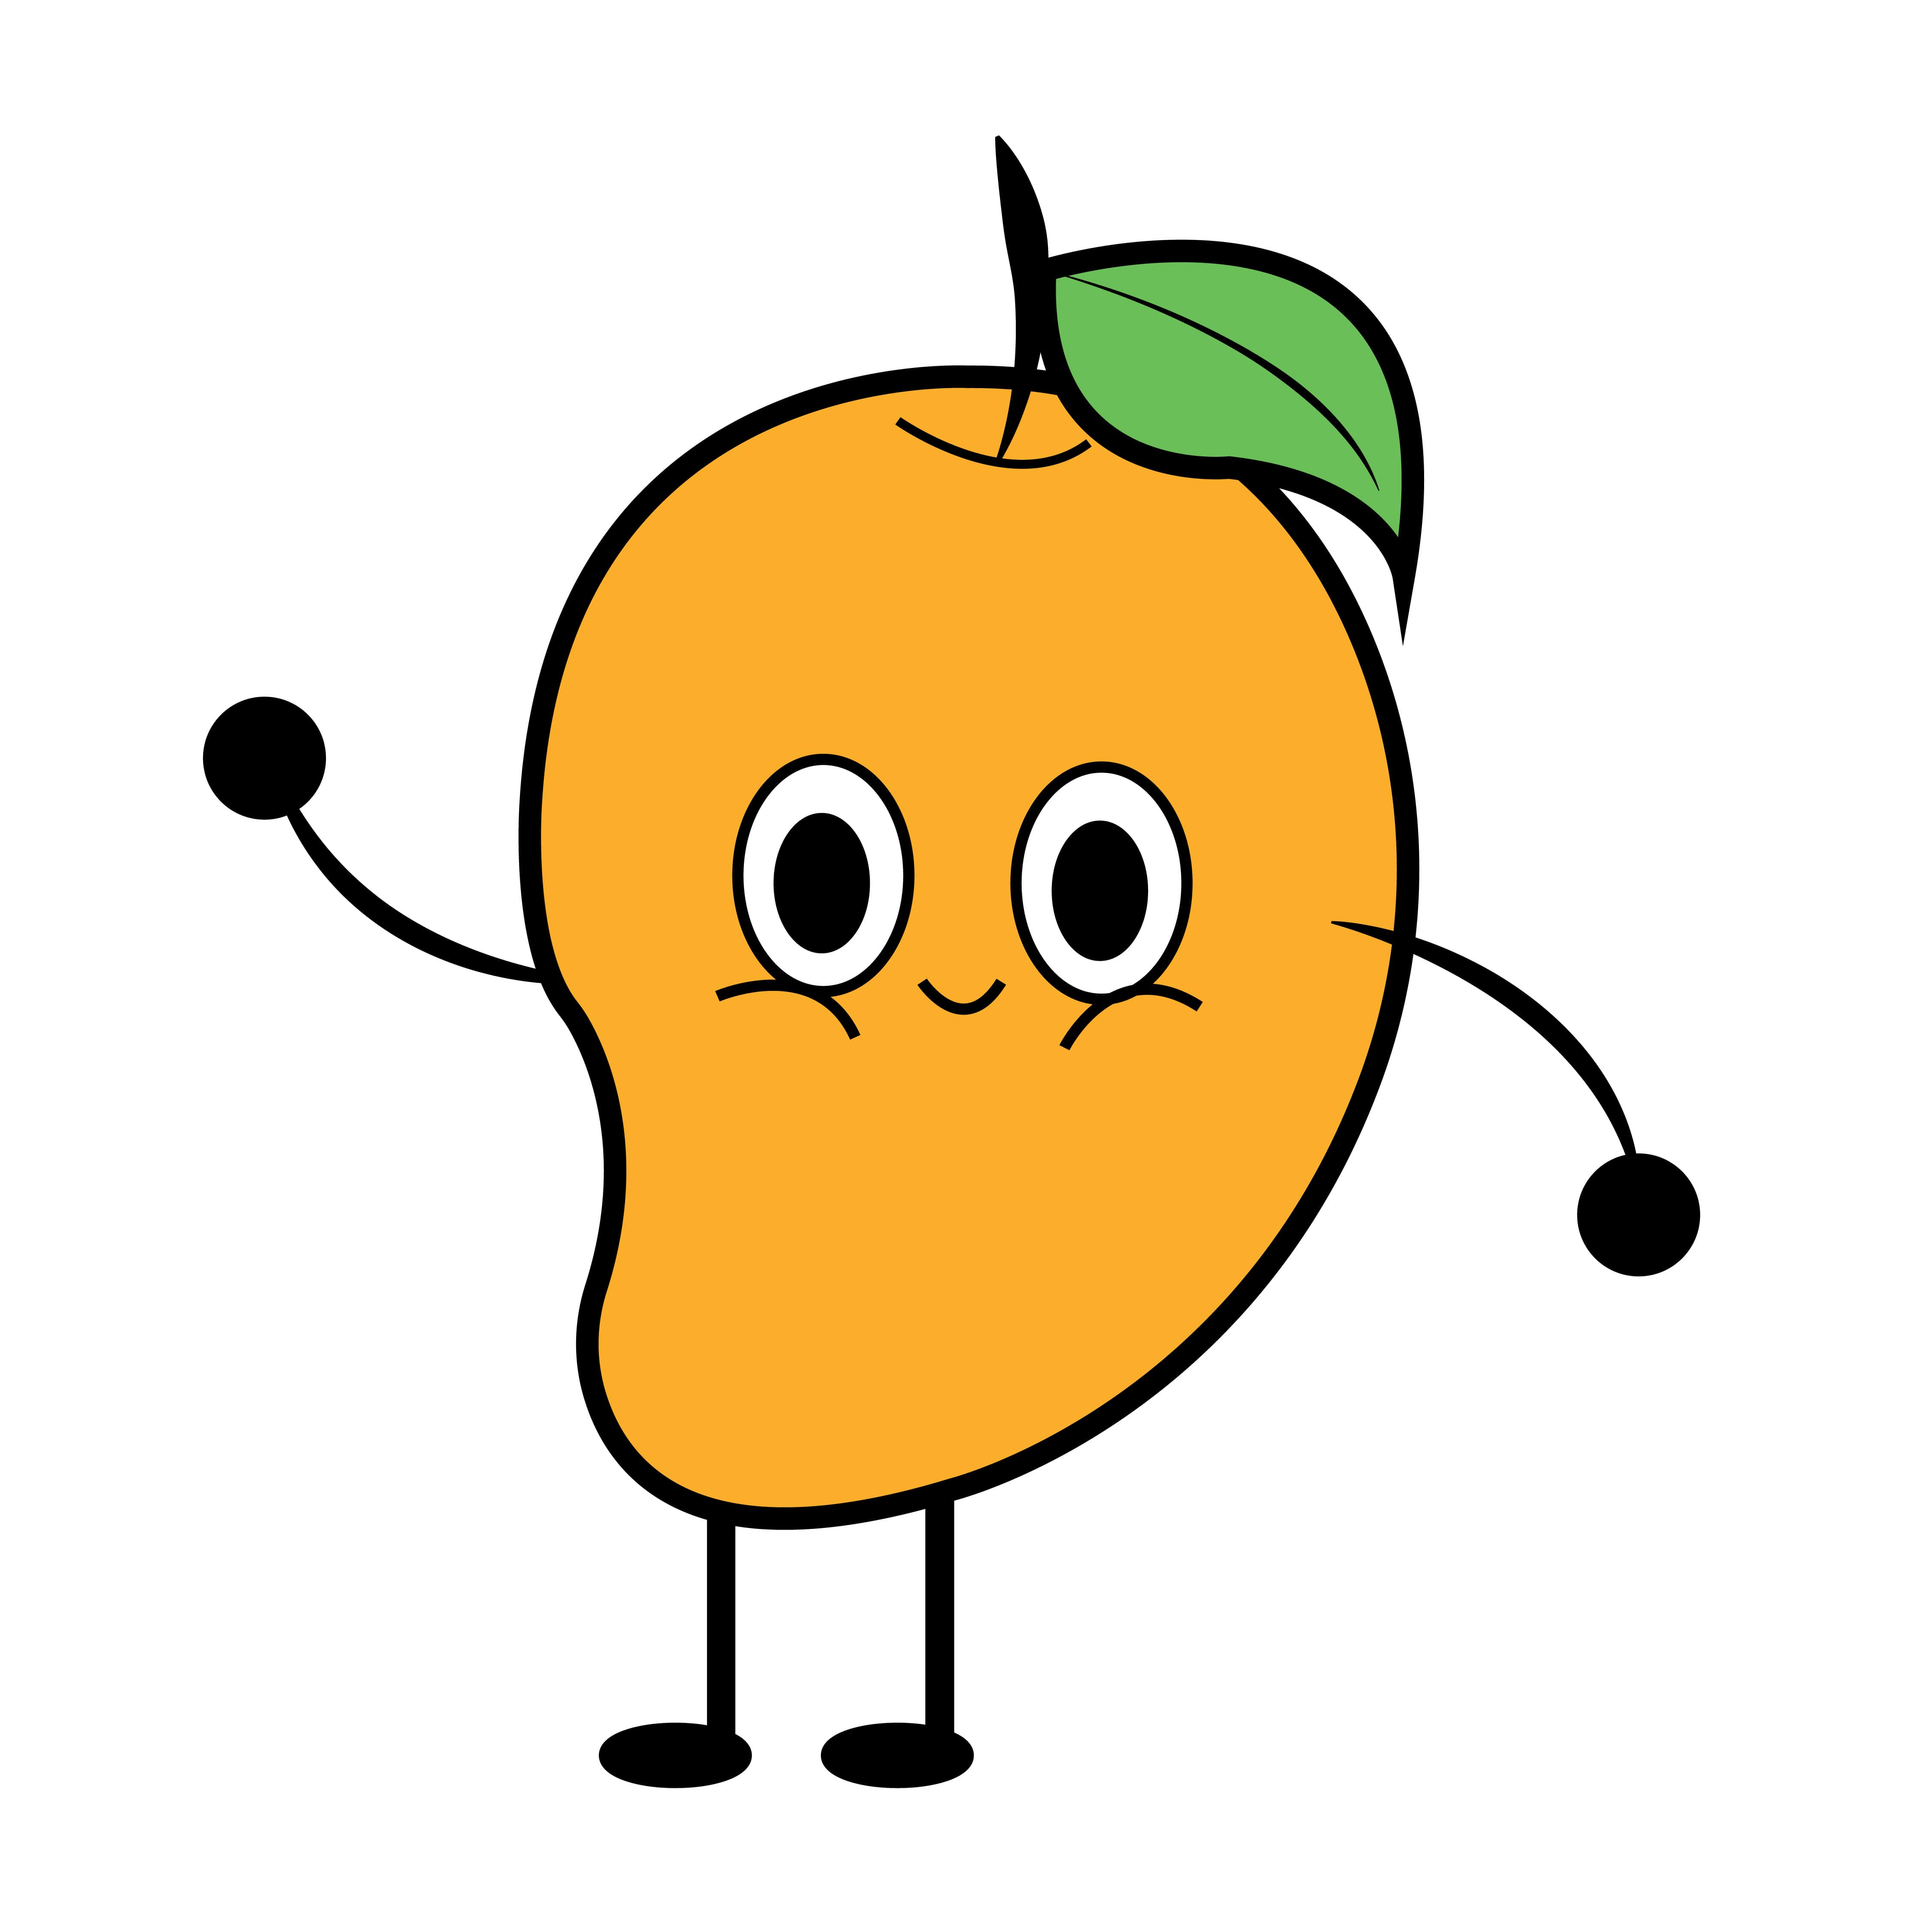 Cute Mango Cartoon Illustration cover image.